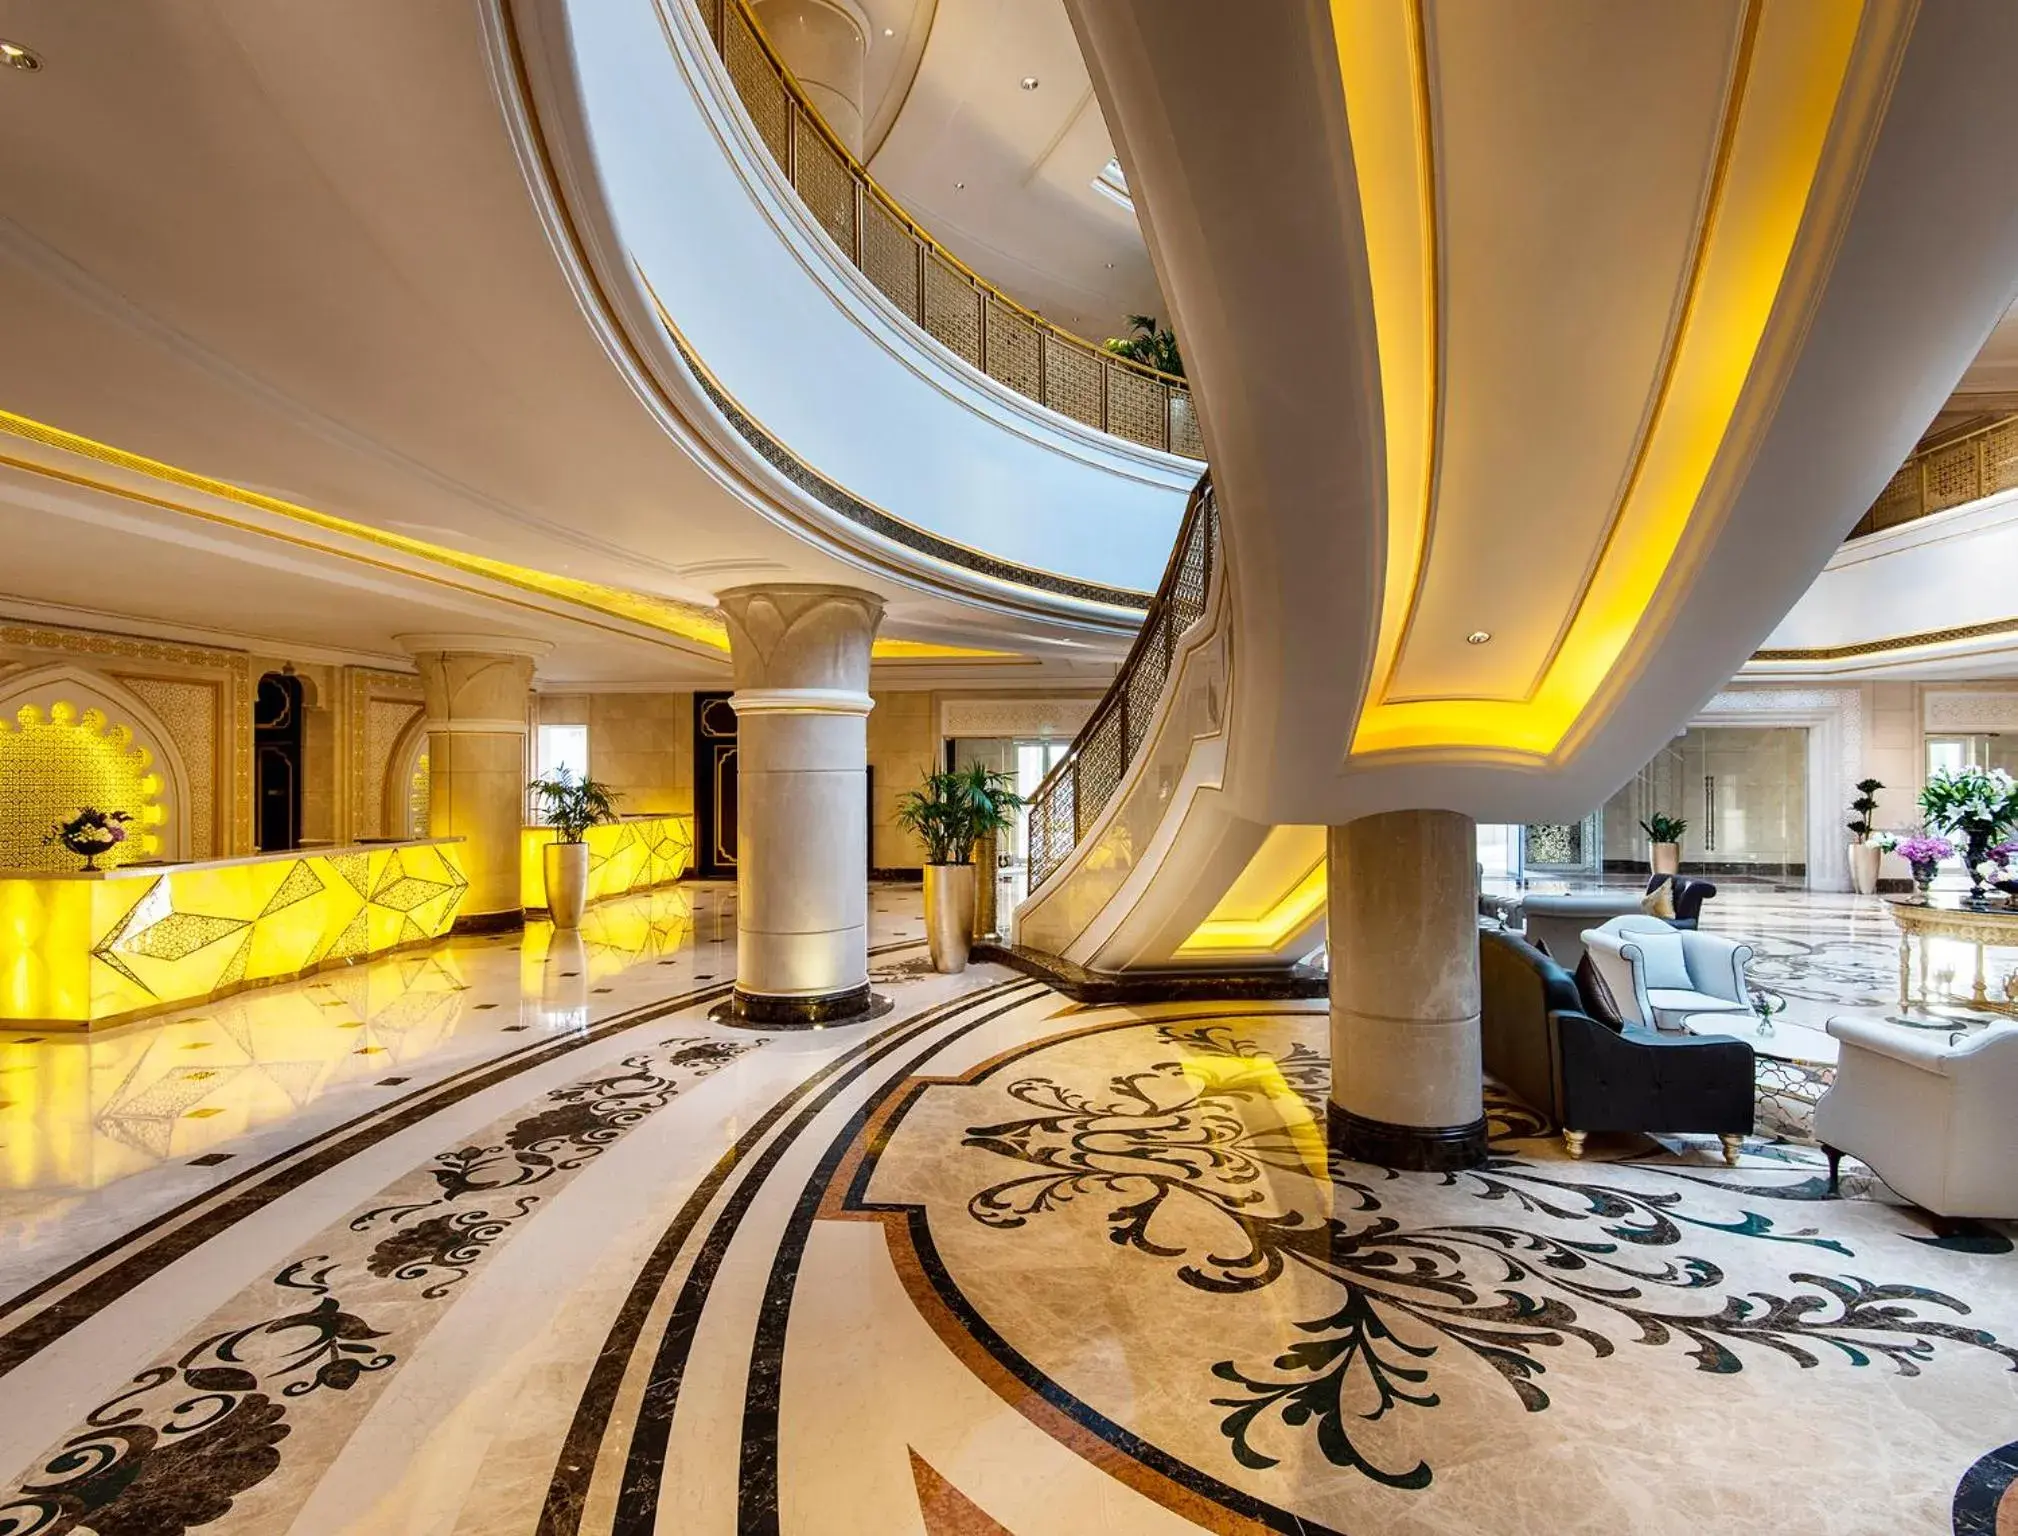 Lobby or reception in Ezdan Palace Hotel